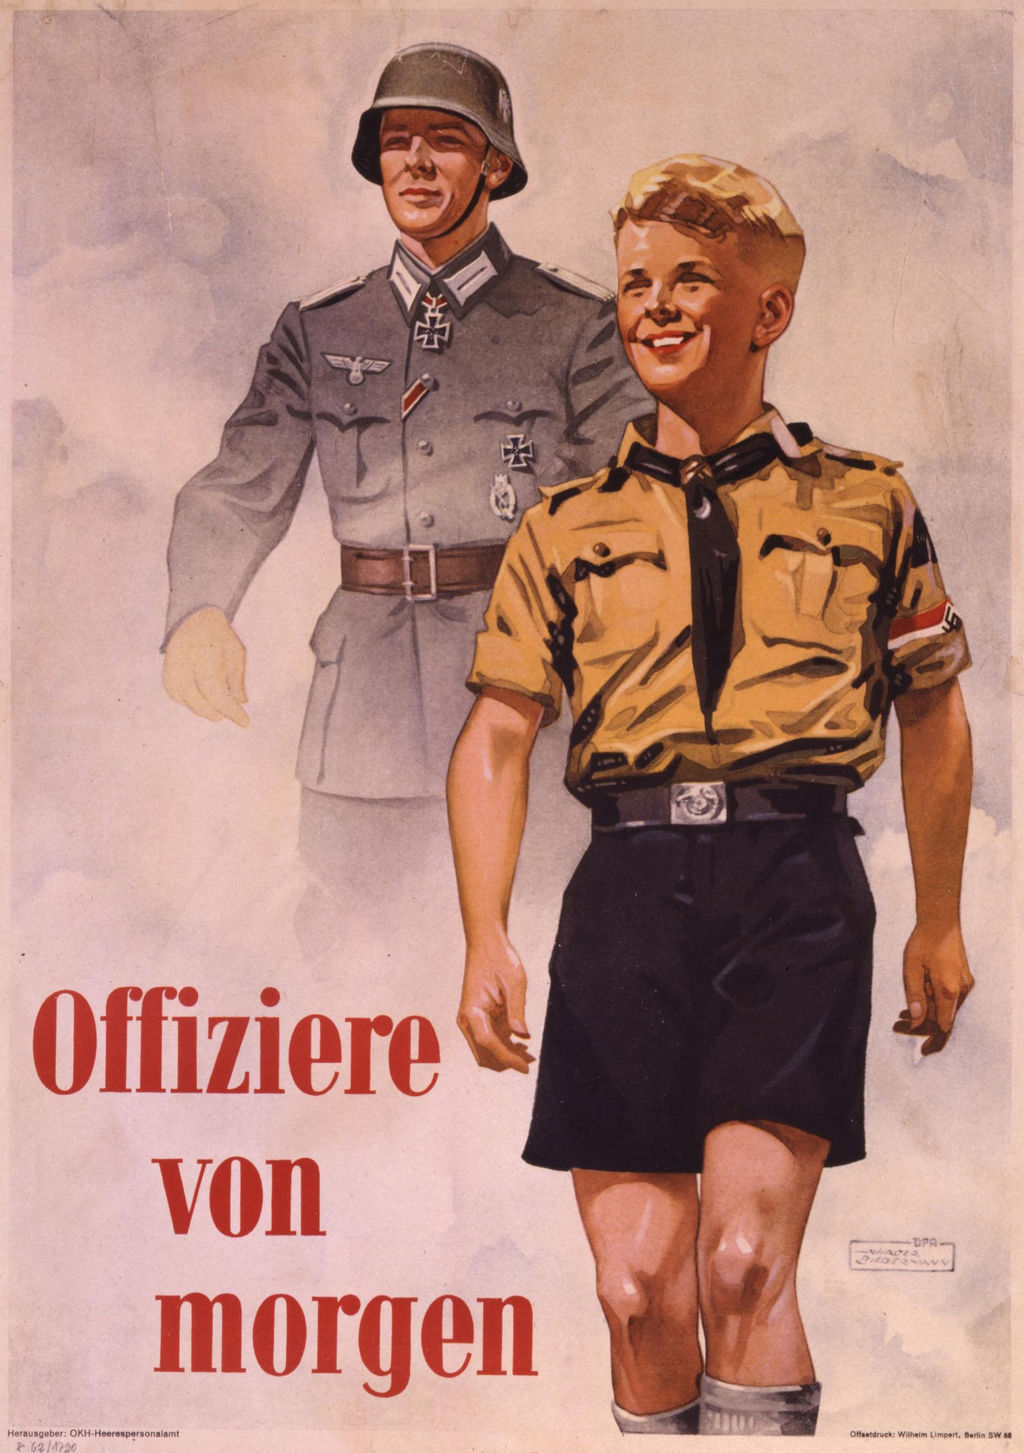 Exponat: Plakat: "Offiziere von morgen", 1940